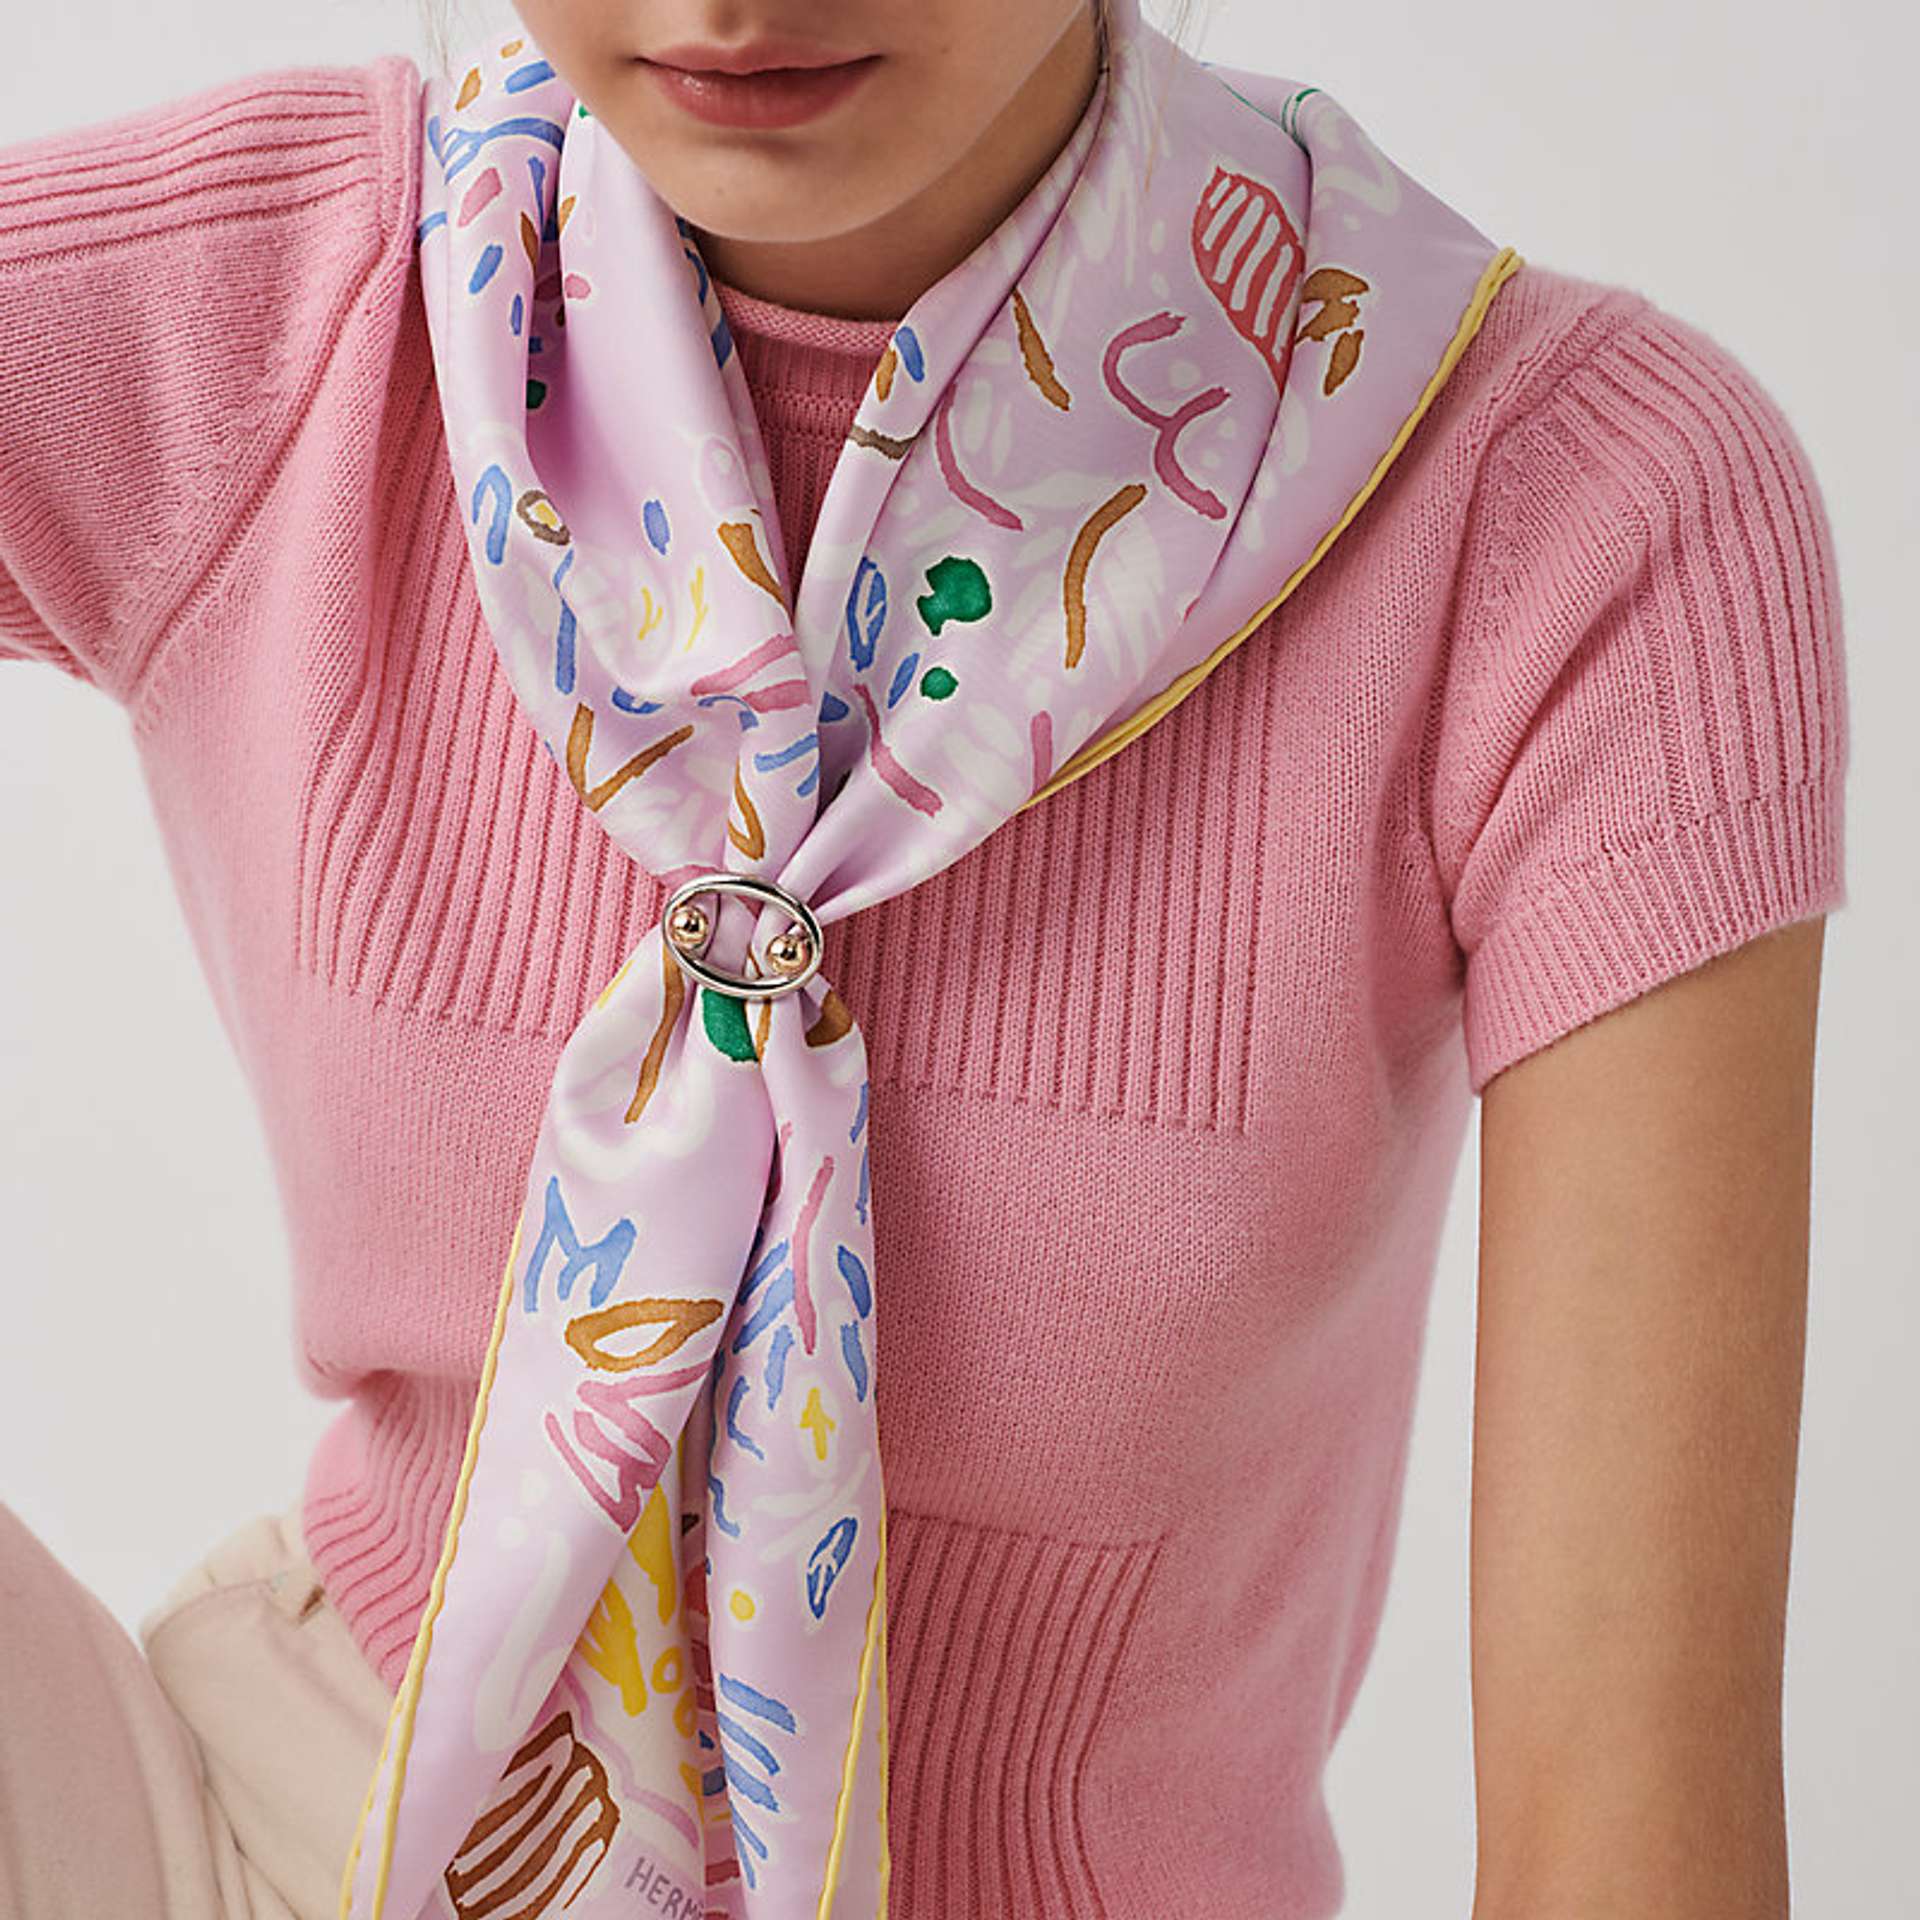 An image of Hermès’ Isola Di Primavera scarf.